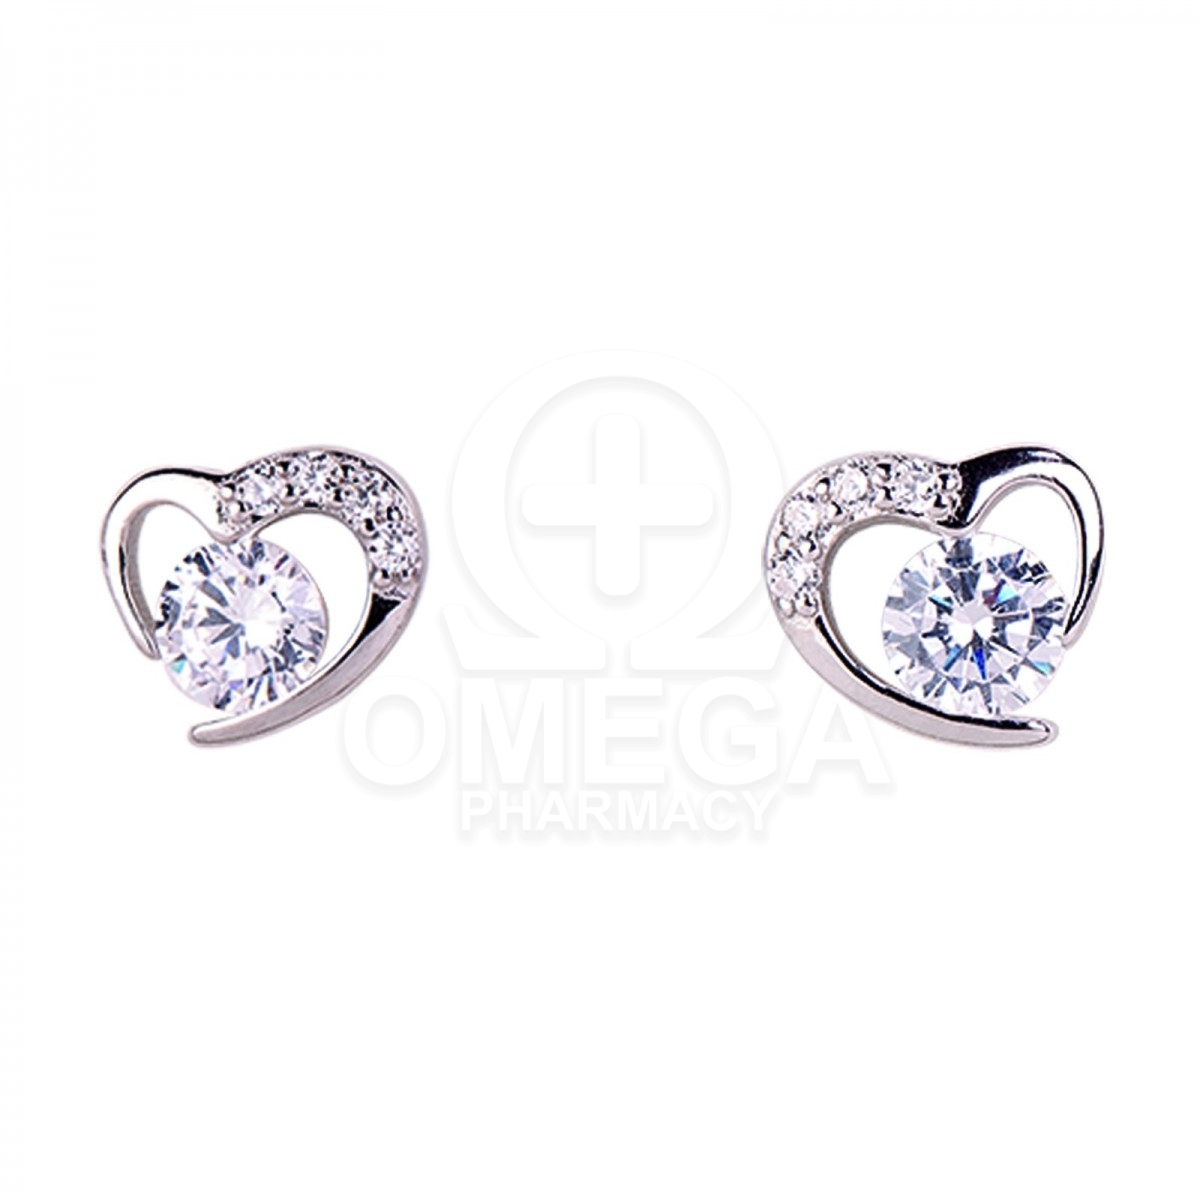 MEDISEI Dalee Jewels Earrings No 05422 Heart with Stud Υποαλλεργικά  Σκουλαρίκια από Ασήμι 925 με Ρόδιο, Καρδιά με Ζιργκόν 1 Ζευγ